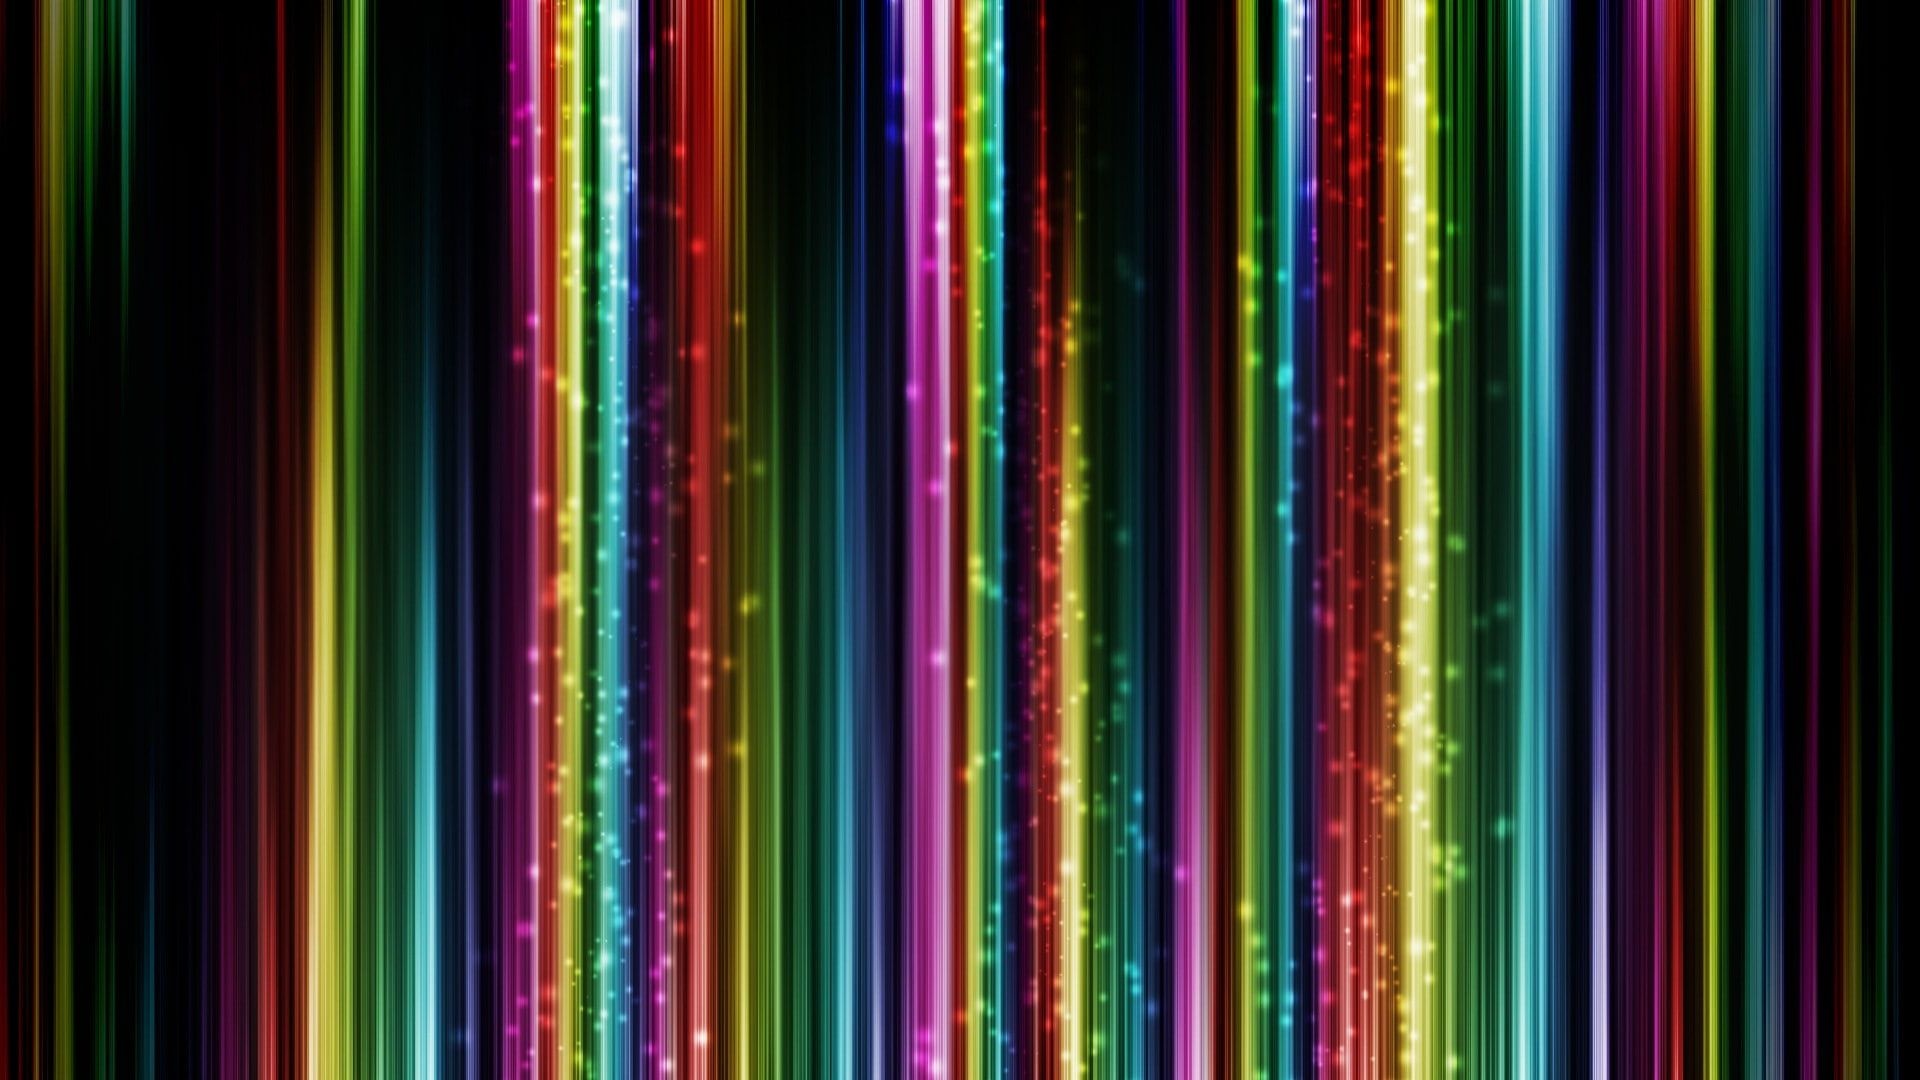 Colorful spectrum, Abstract art wallpaper, Abstract lines, Digital design, 1920x1080 Full HD Desktop